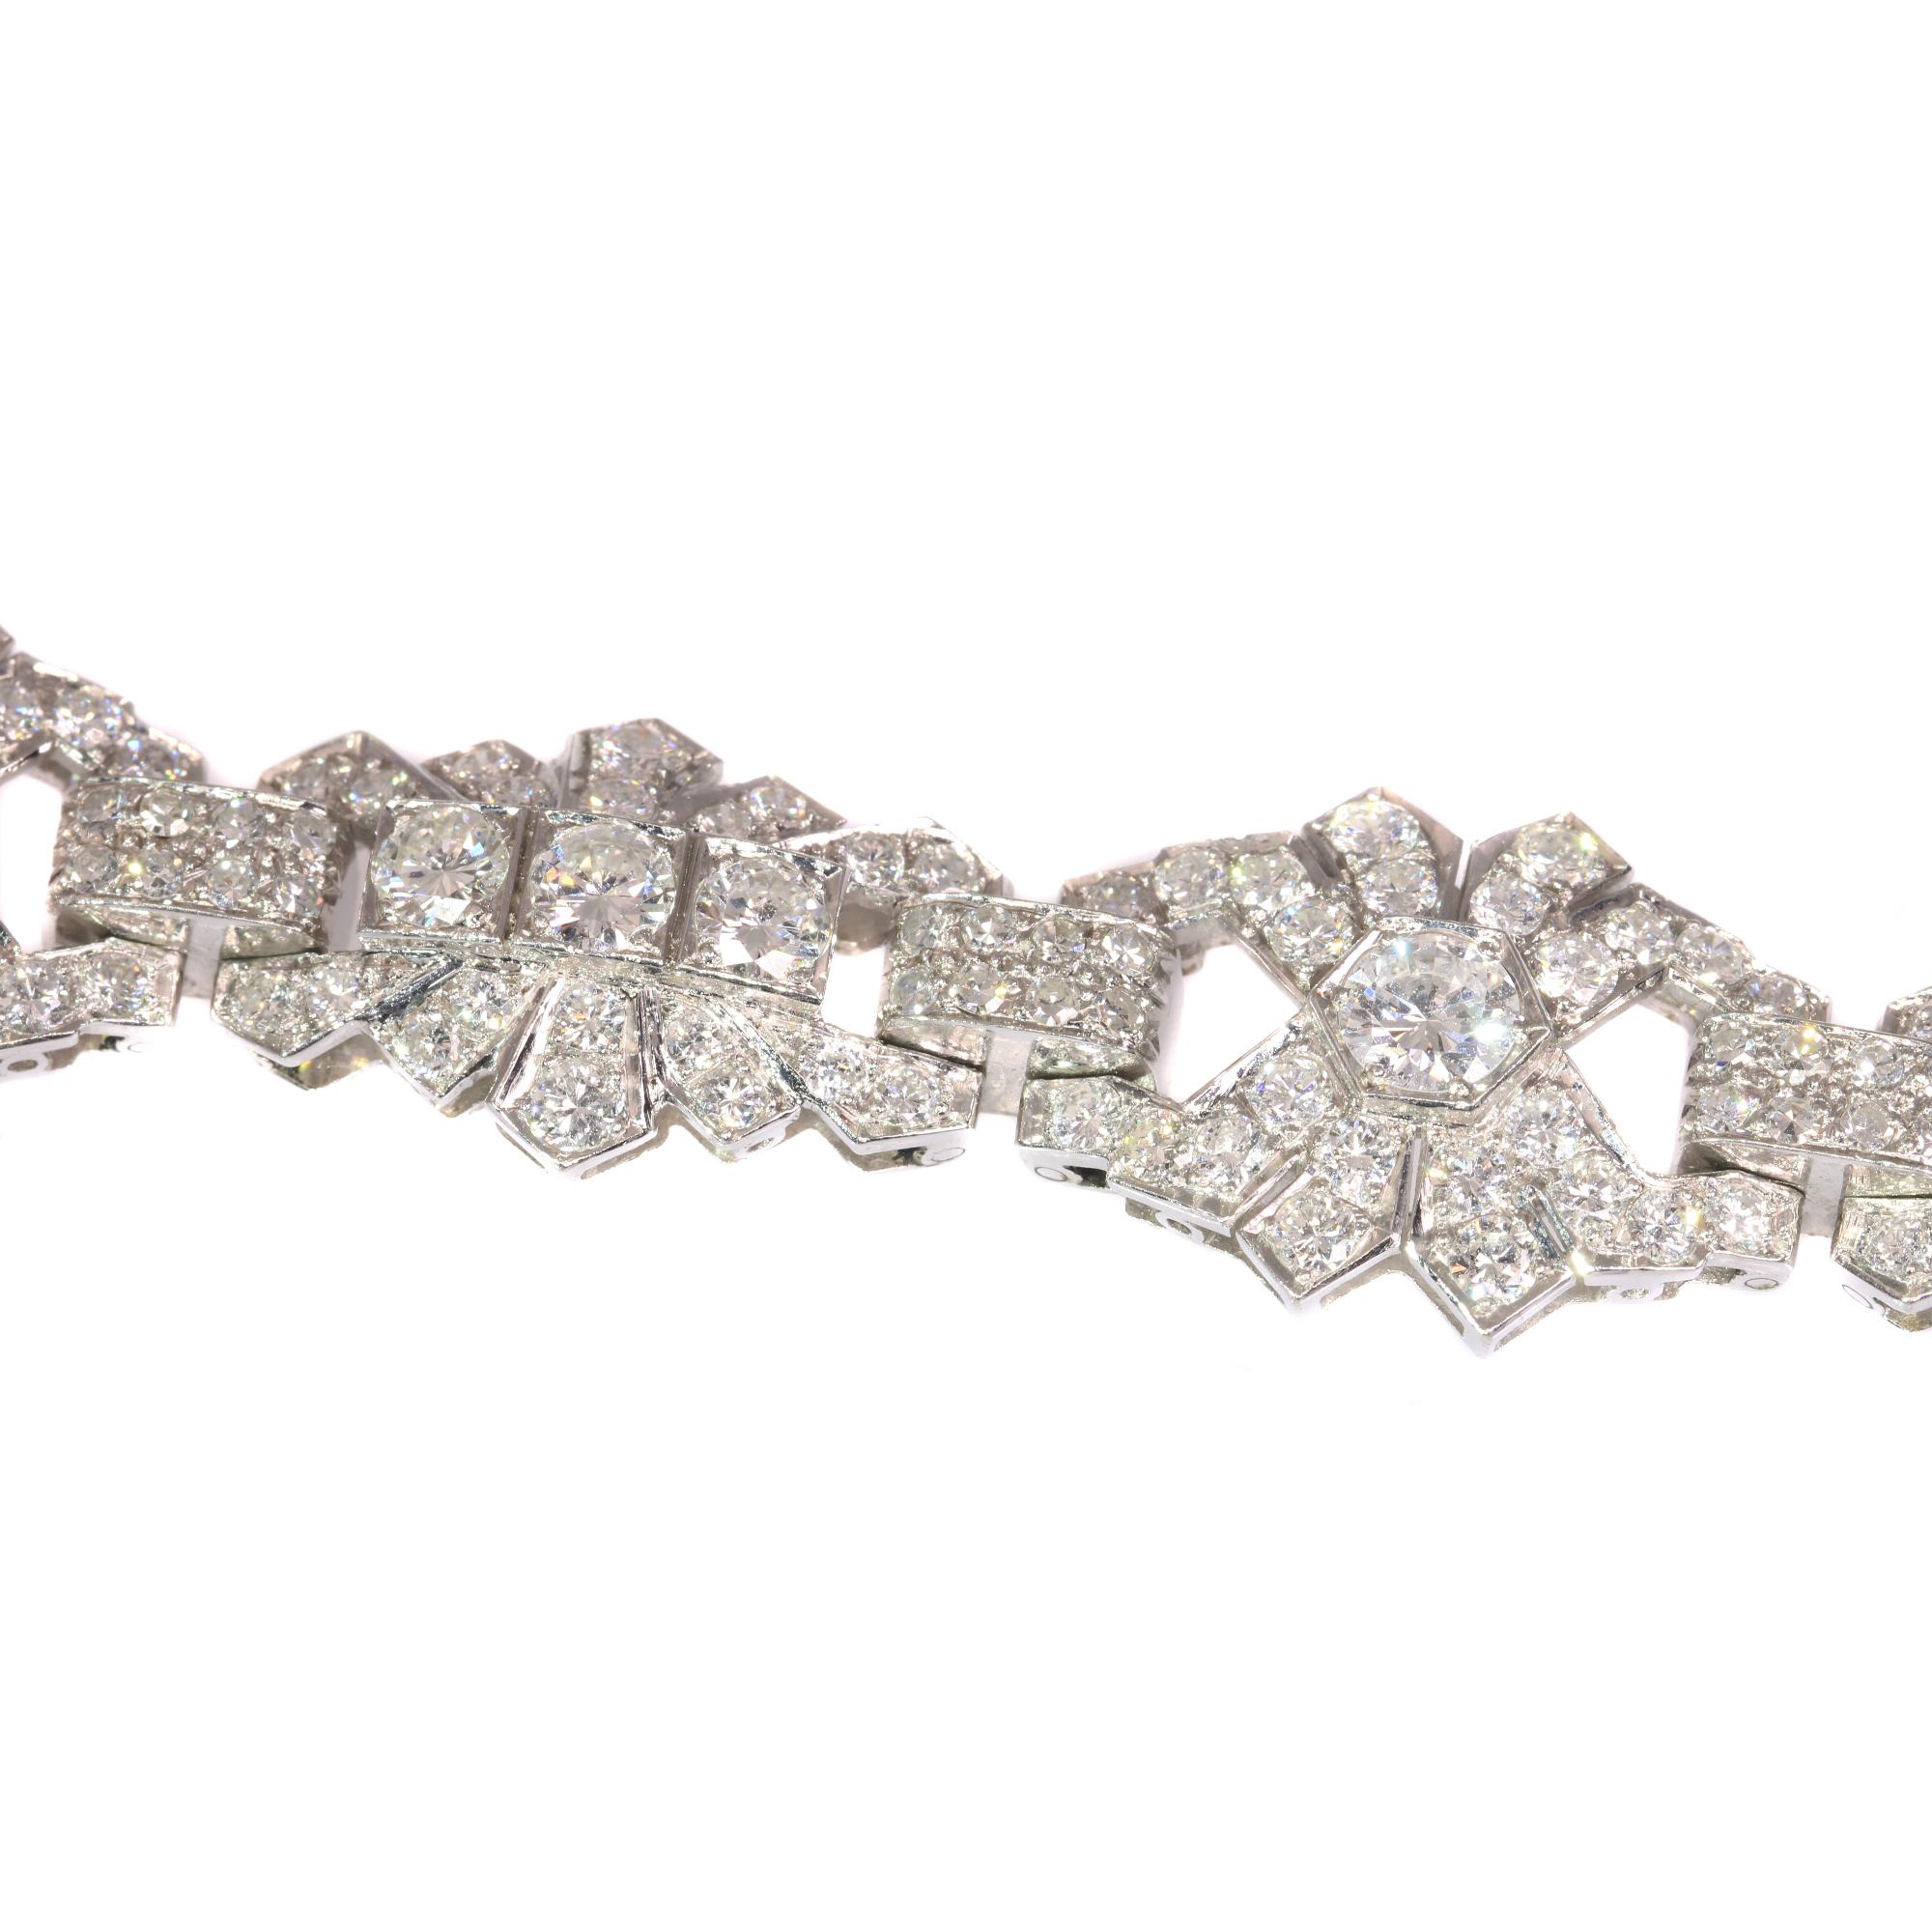 Vintage Platinum 12 Carat Diamond Bracelet, Art Deco Style Made in the 1950s For Sale 2